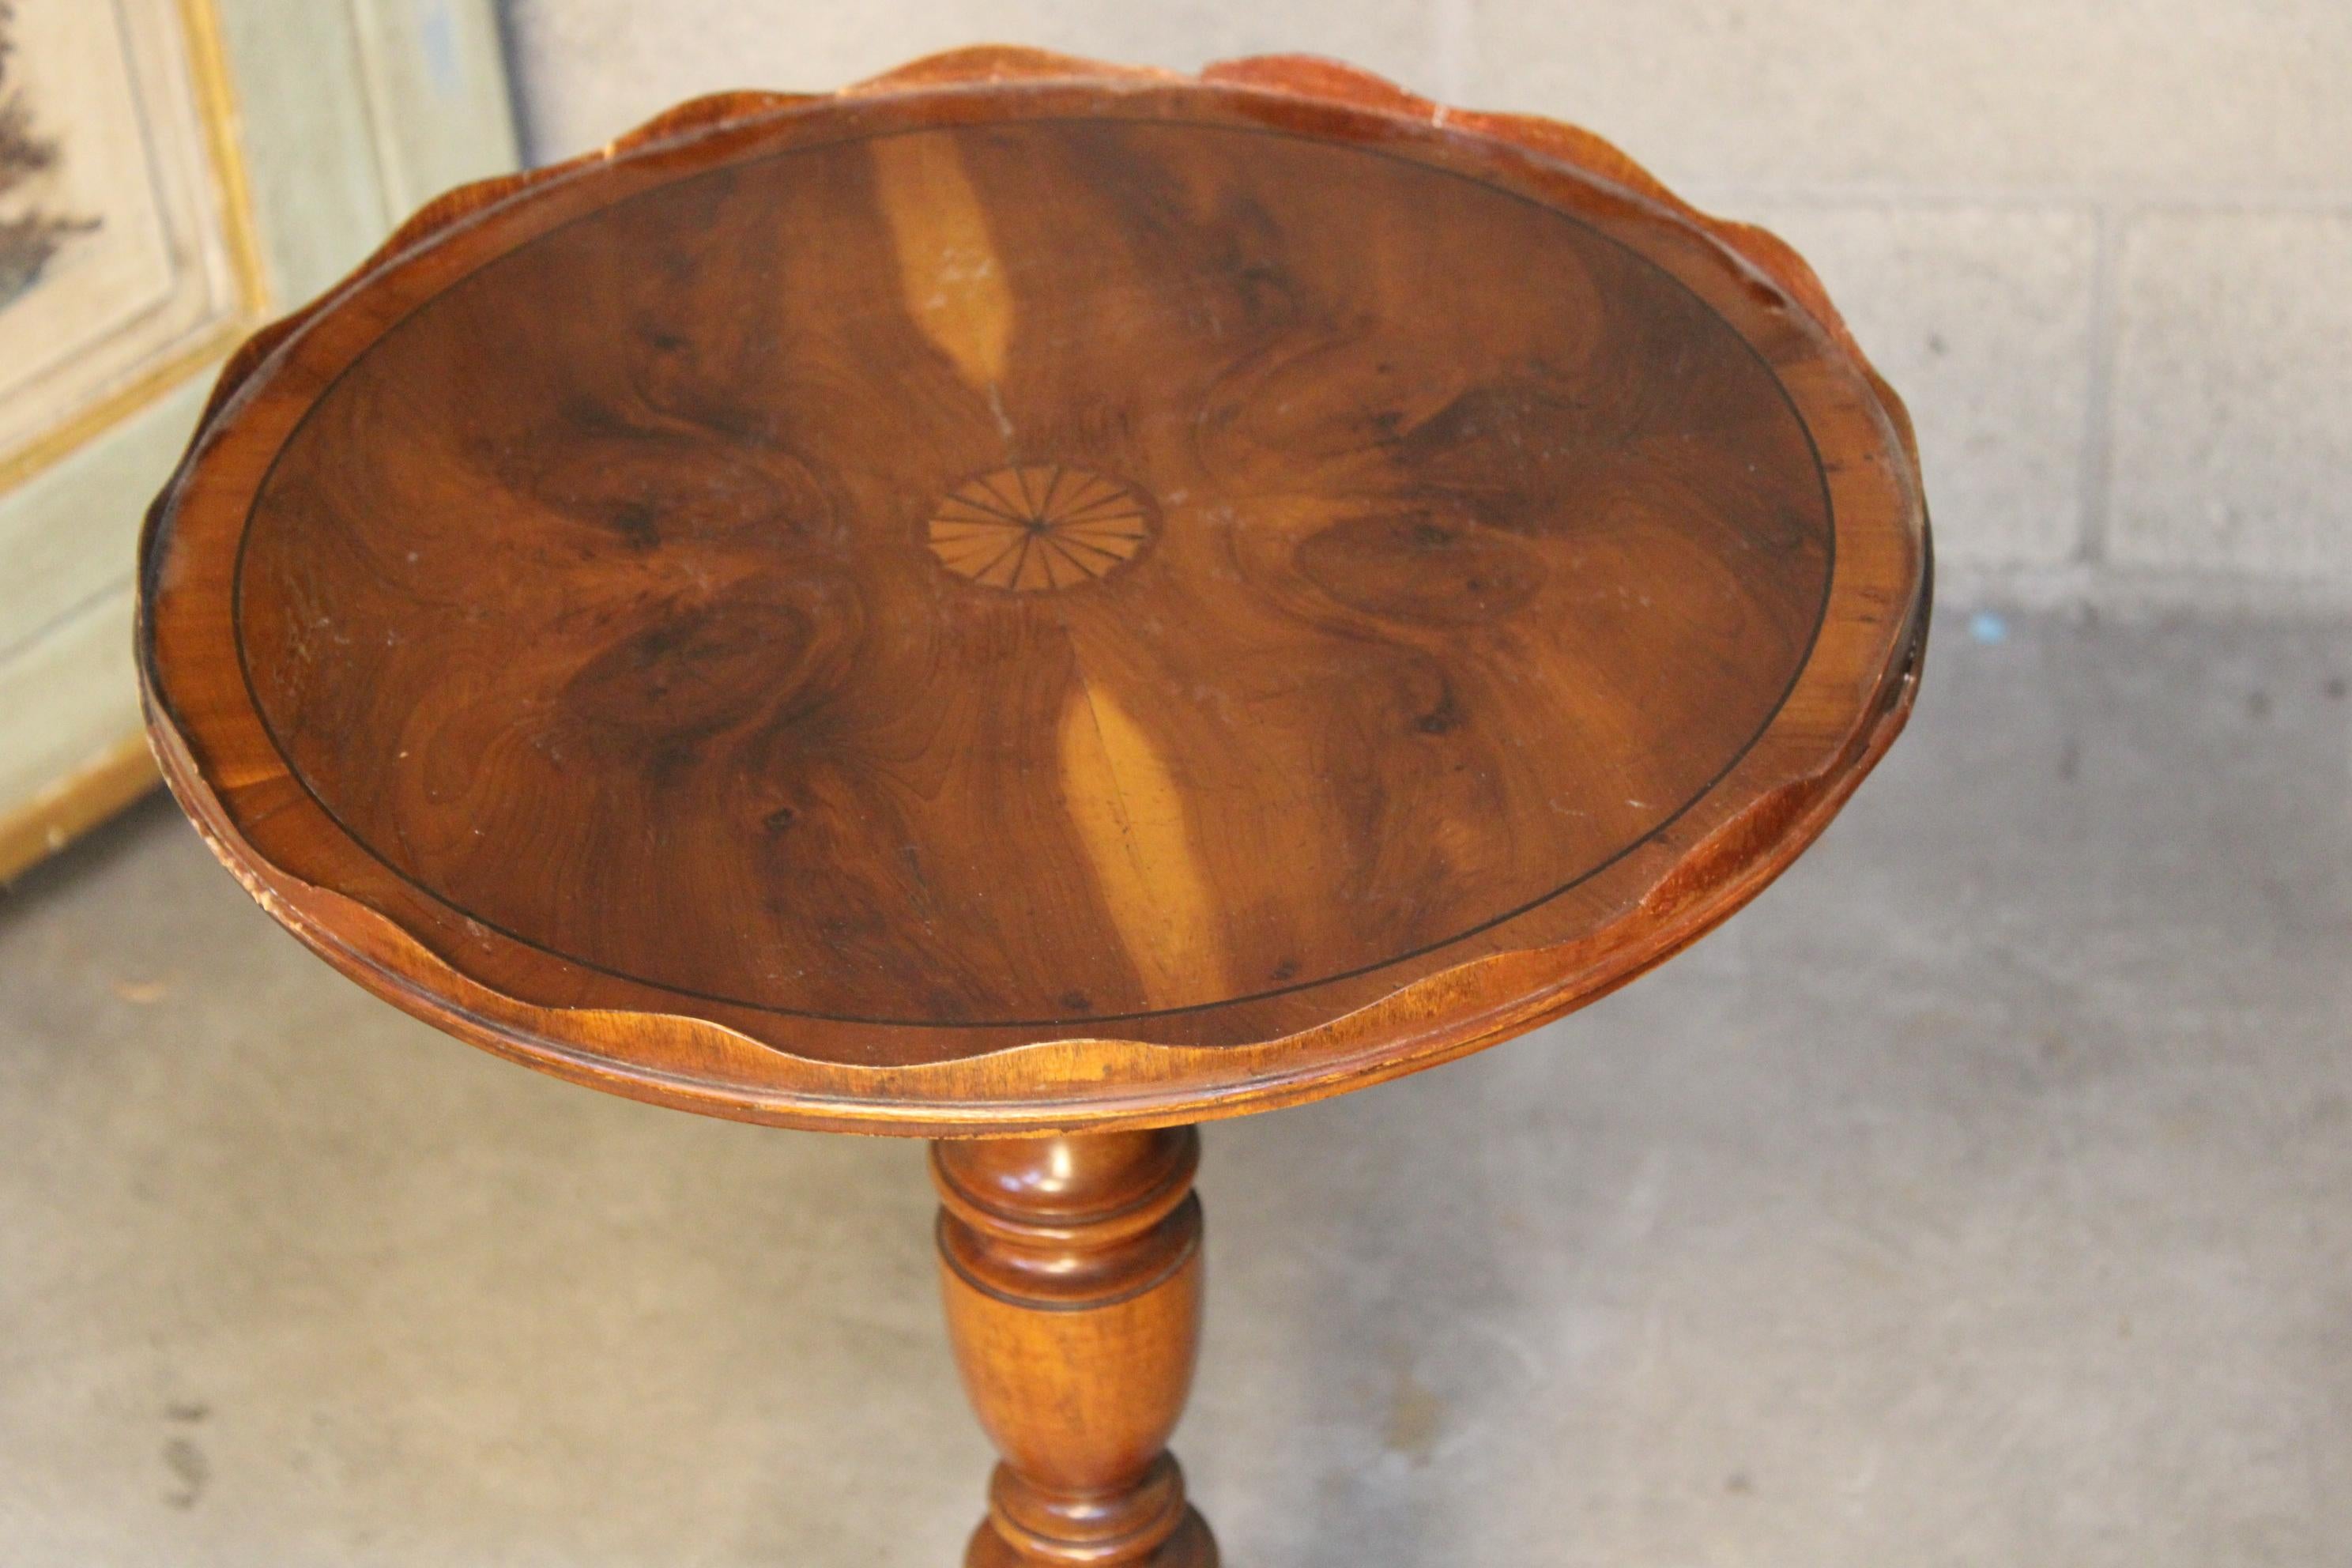 English Sheraton Revival Hardwood Tripod Side Table, 19th century small coffee table